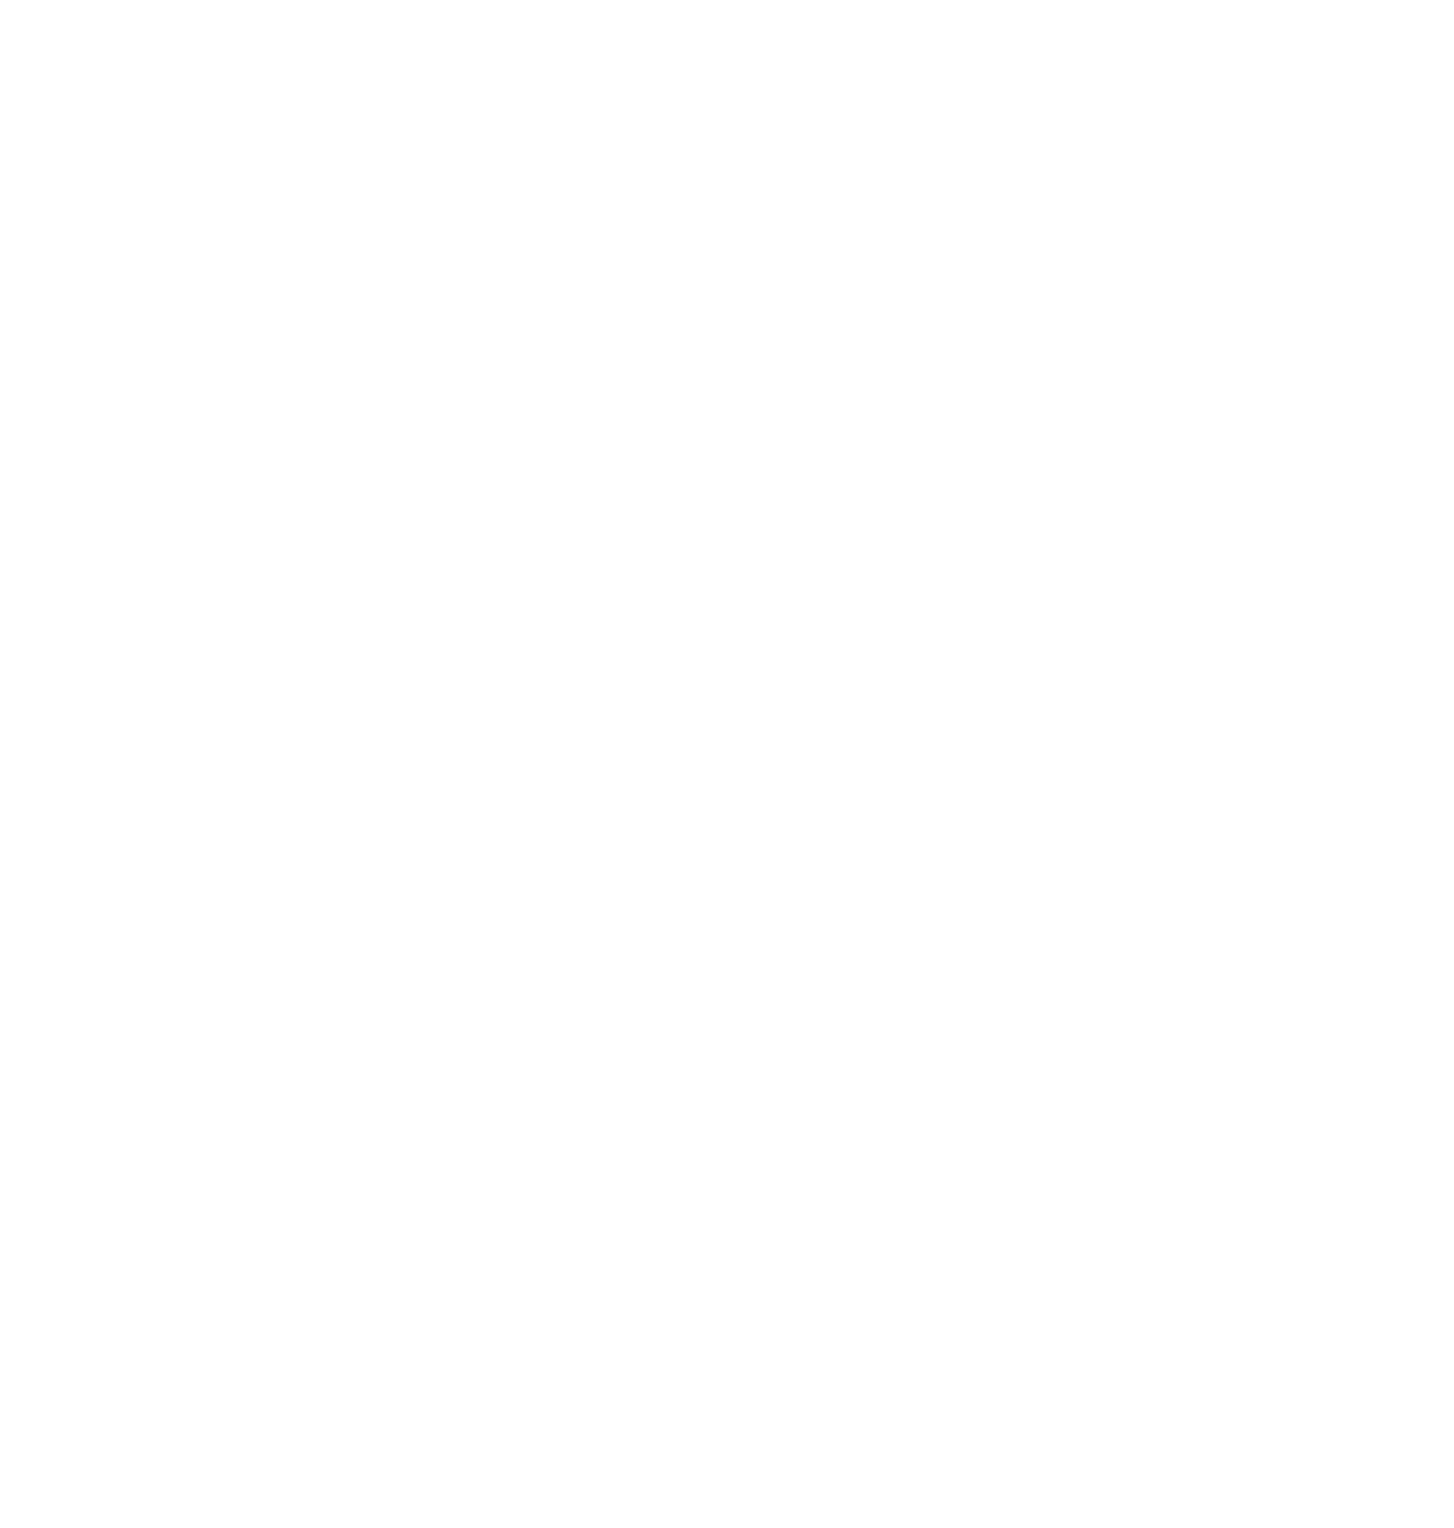 Telia Company logo pour fonds sombres (PNG transparent)